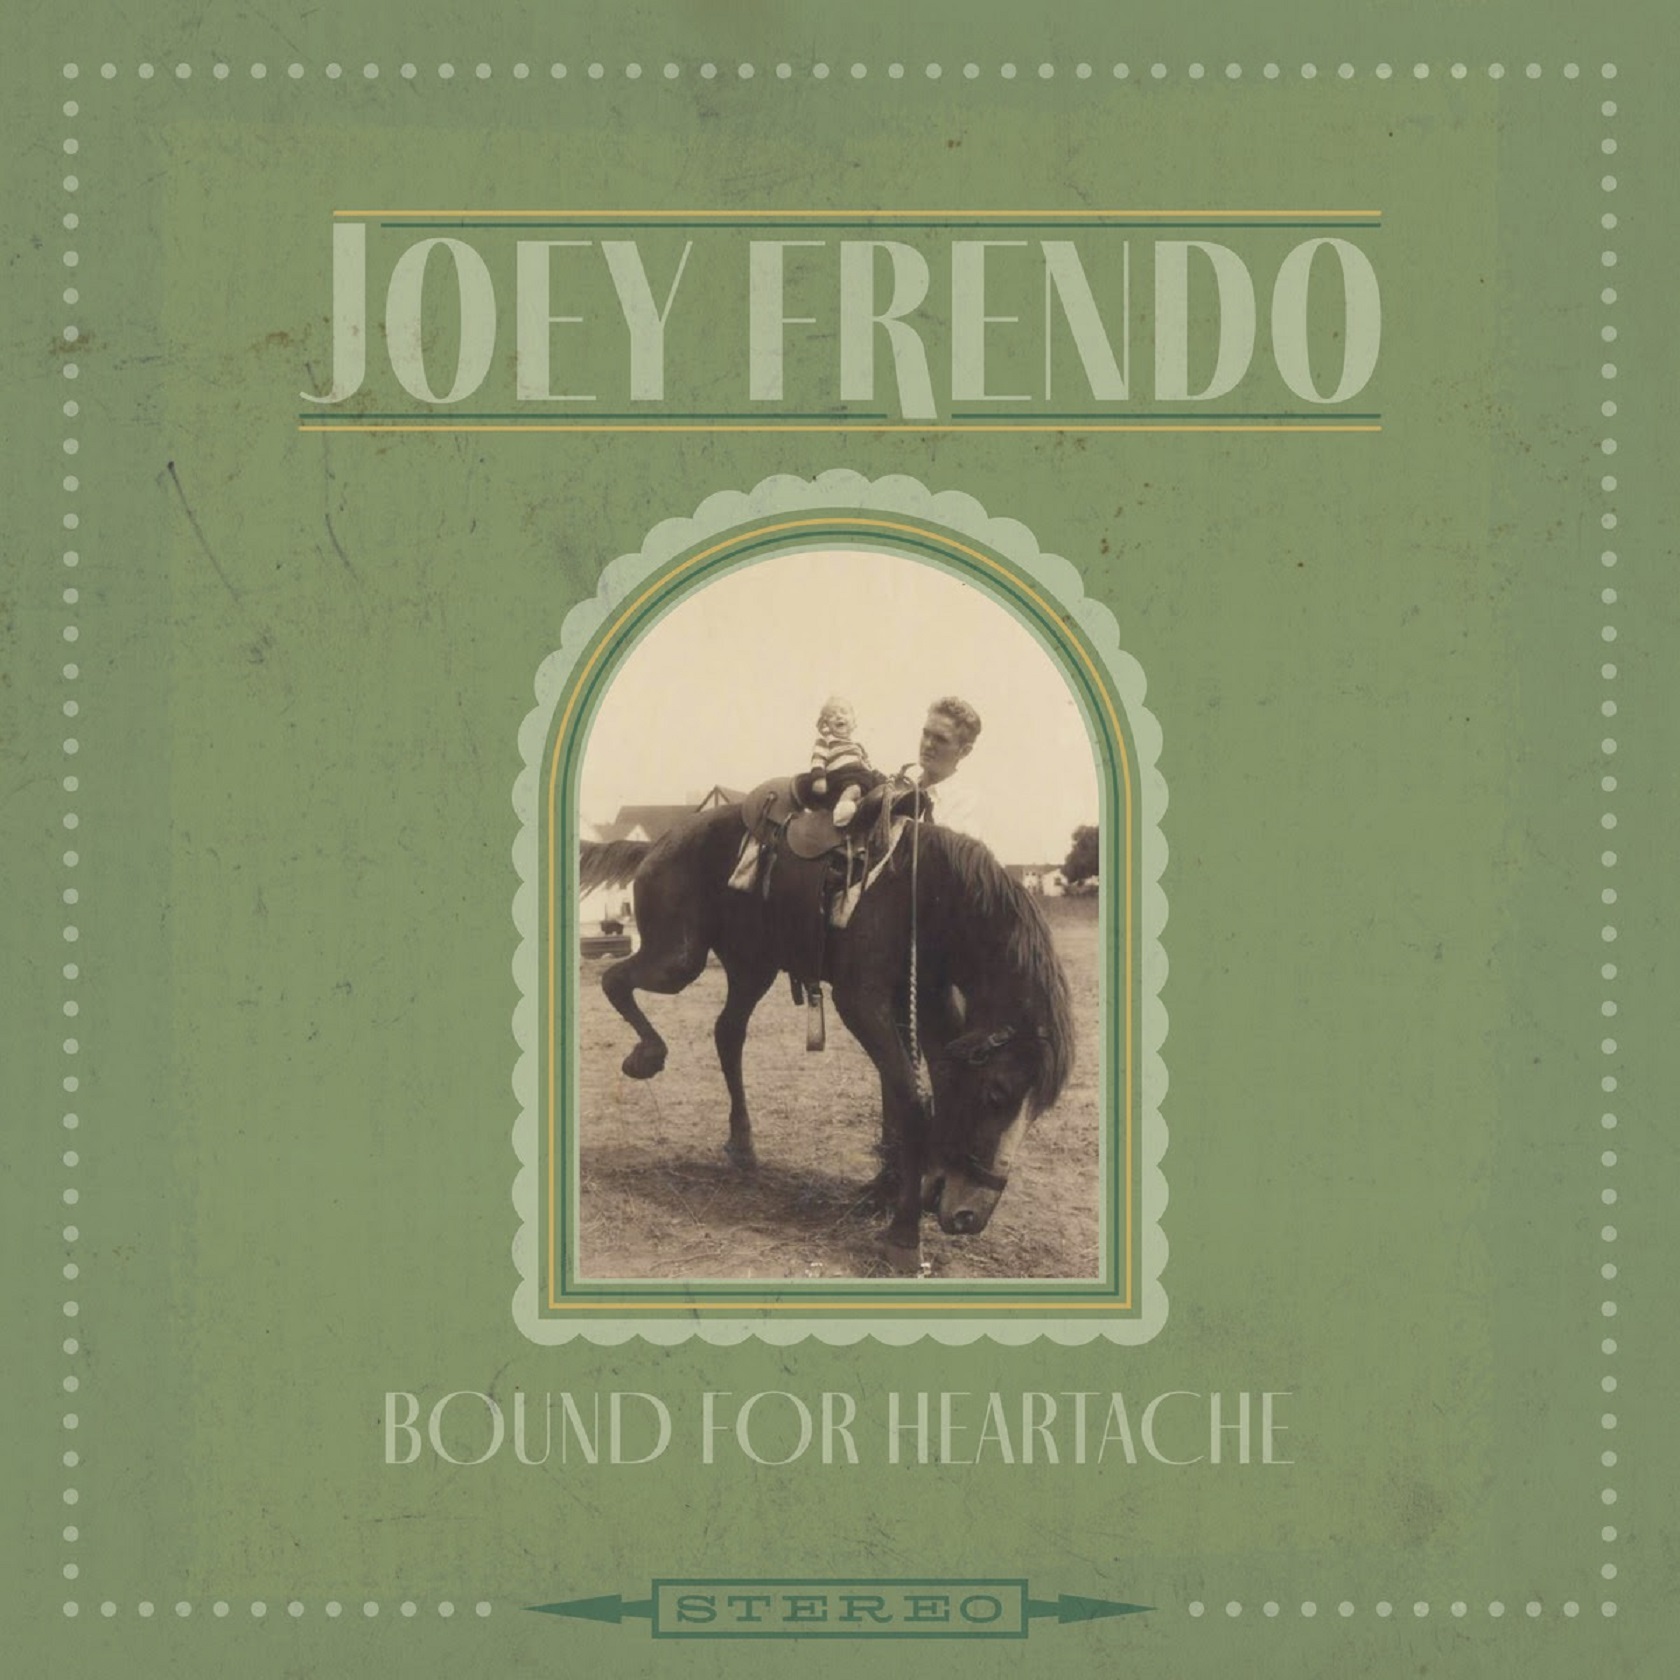 TULSA'S JOEY FRENDO RELEASES DEBUT ALBUM